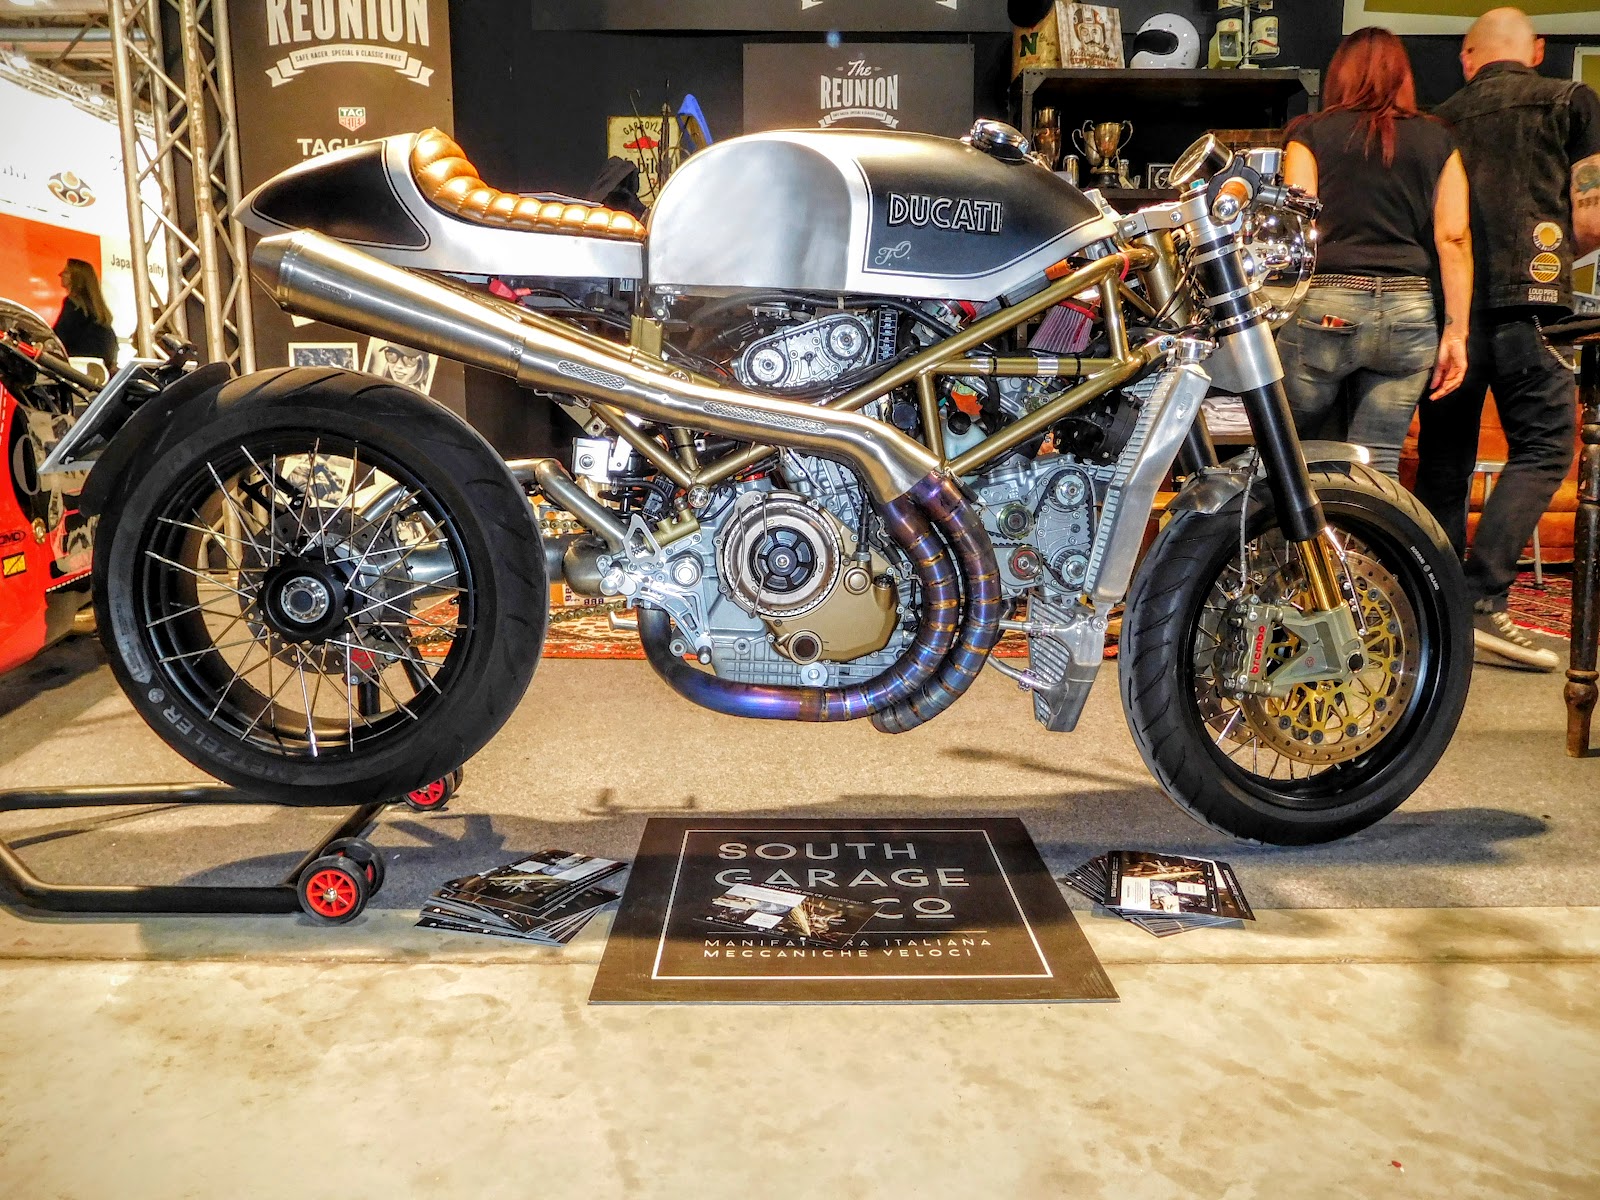 NYDucati: Custom Ducati Cafe Racer shot by Tigh Loughhead